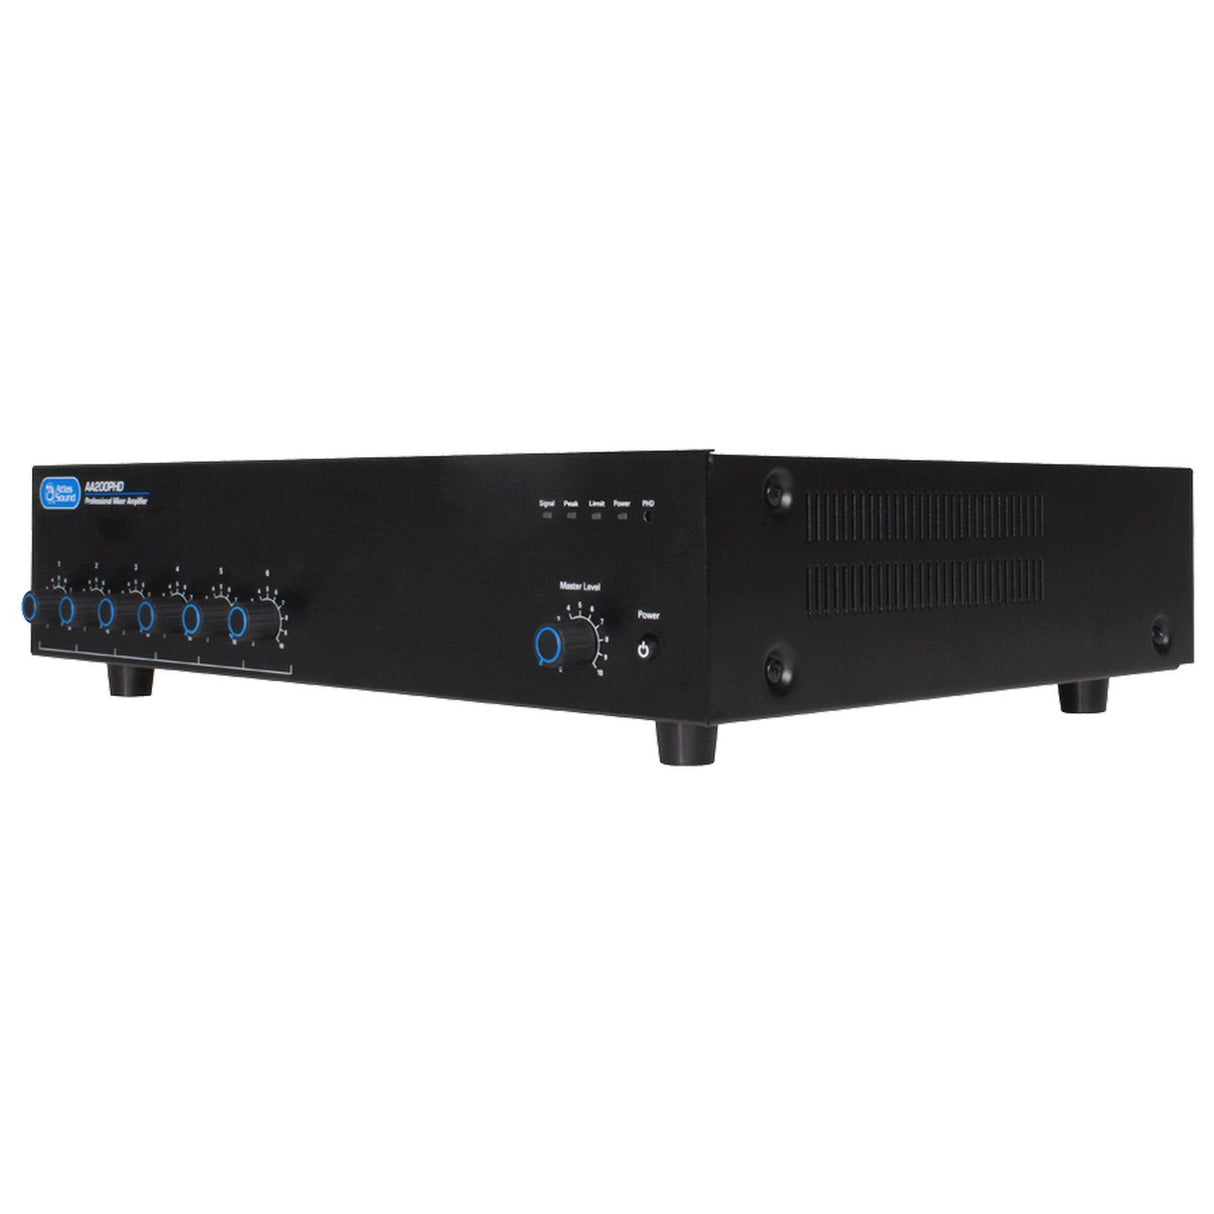 Atlas Sound AA200PHD 6-Input, 200-Watt Mixer Amplifier with Automatic System Test